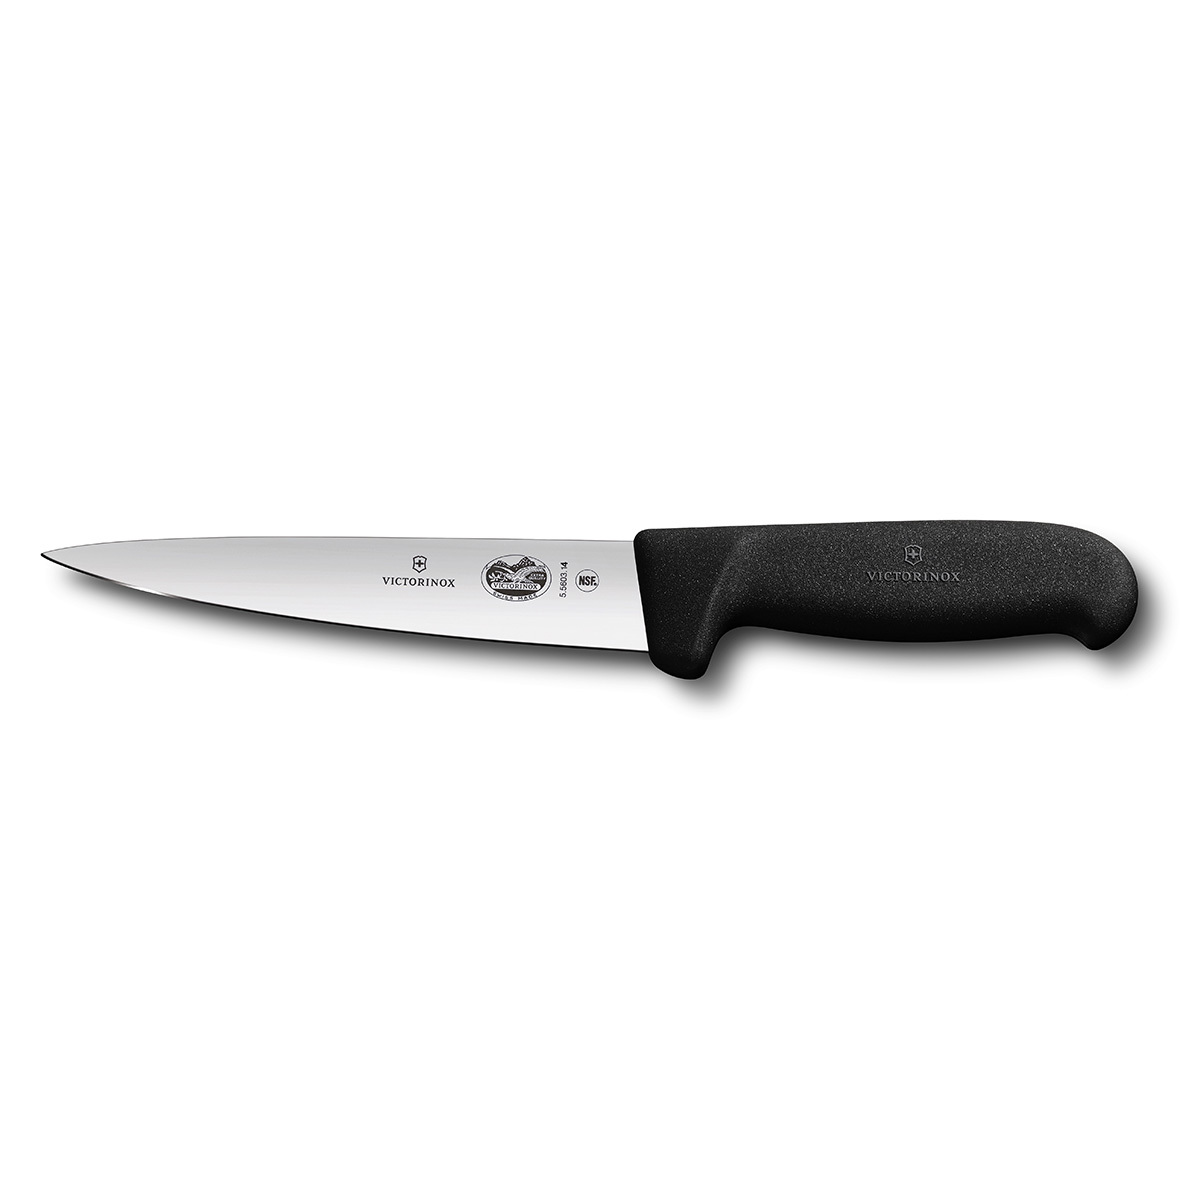 Кухонный нож для разделки Victorinox  5.5603.14 кухонный нож для разделки victorinox 5 5603 14